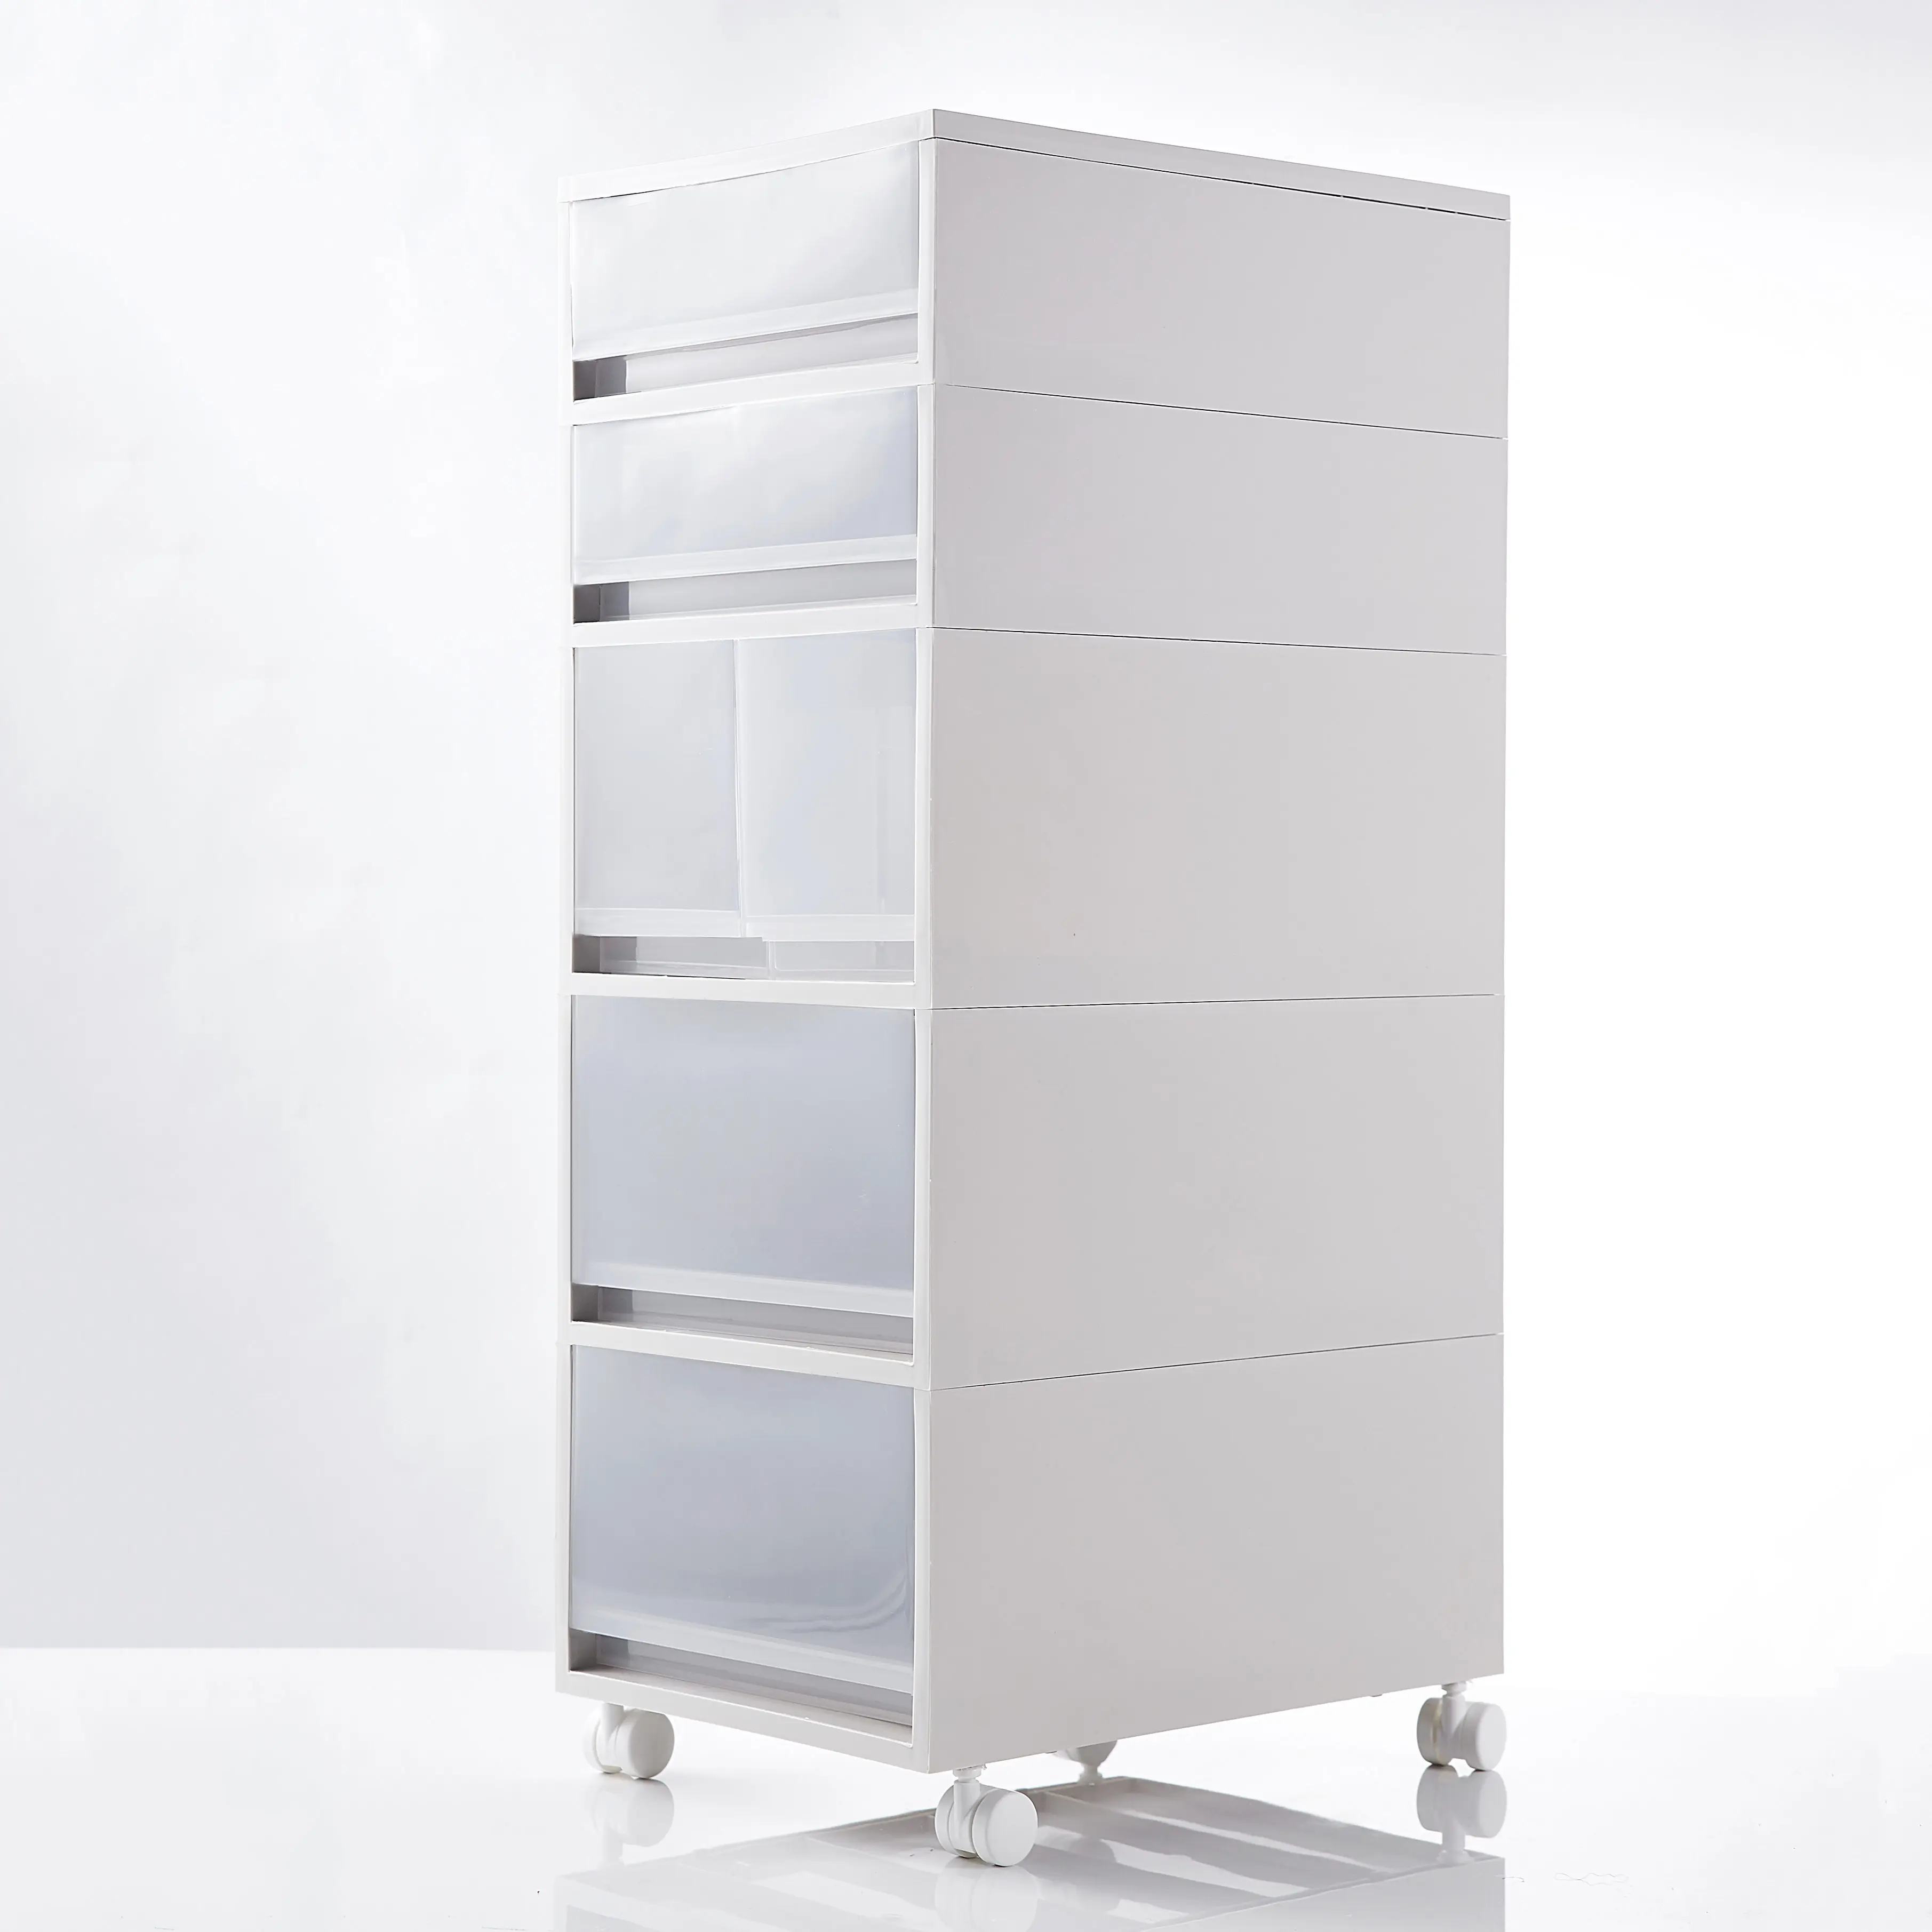 

Narrow Slim Rolling Storage Cart and Organizer, Kitchen Storage Cabinet Beside Fridge Small Plastic Rolling Shelf With Drawers F